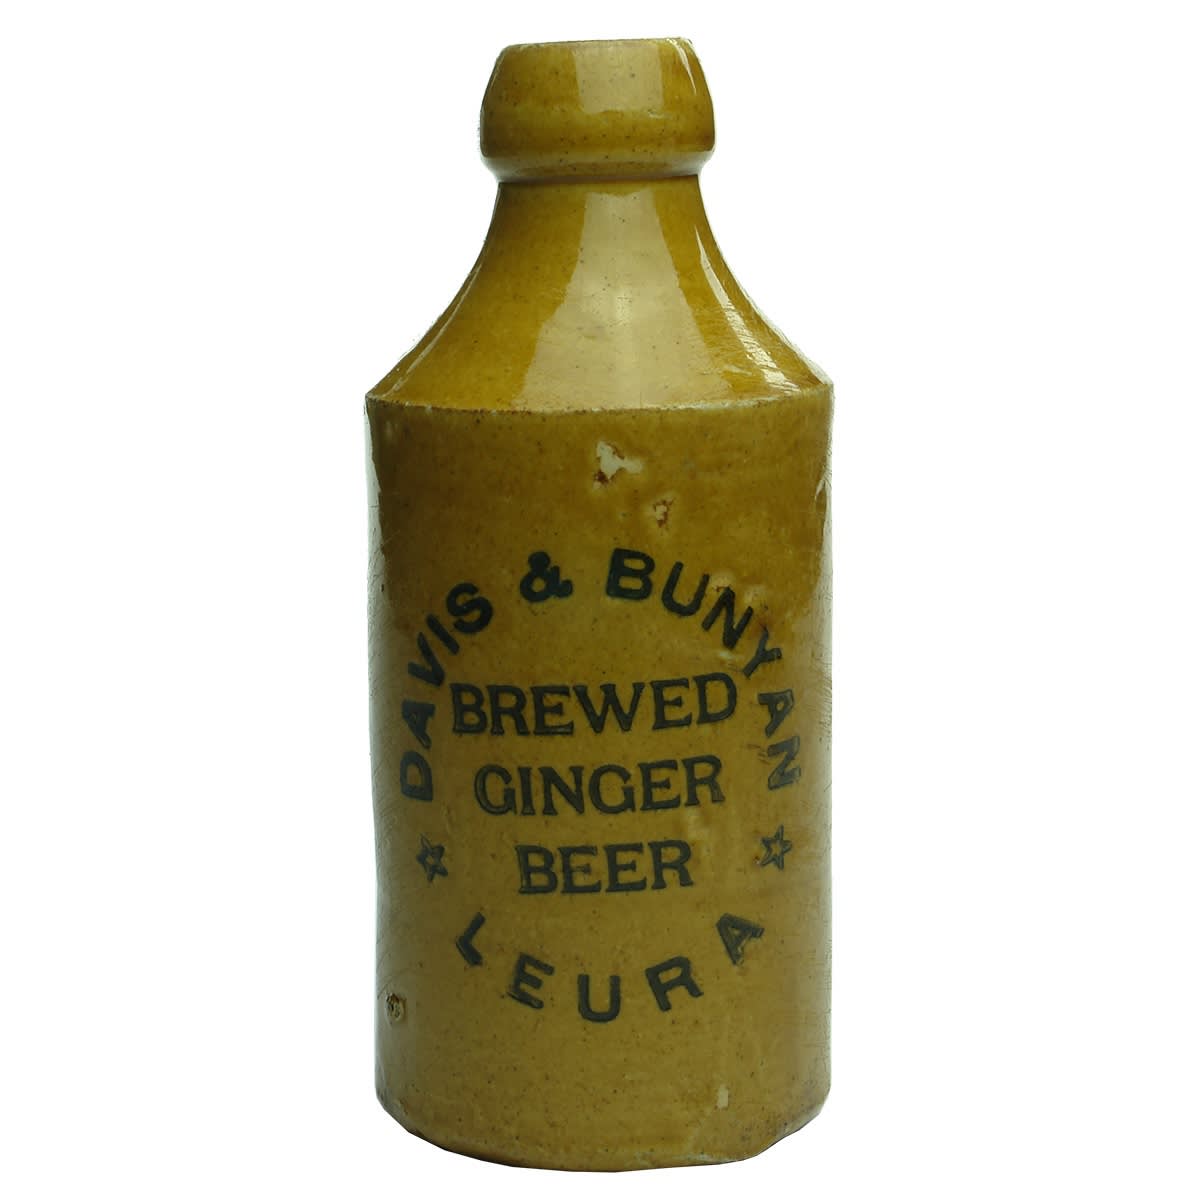 Ginger Beer. Davis & Bunyan, Leura. All Tan. R. Fowler, Sydney. (New South Wales)